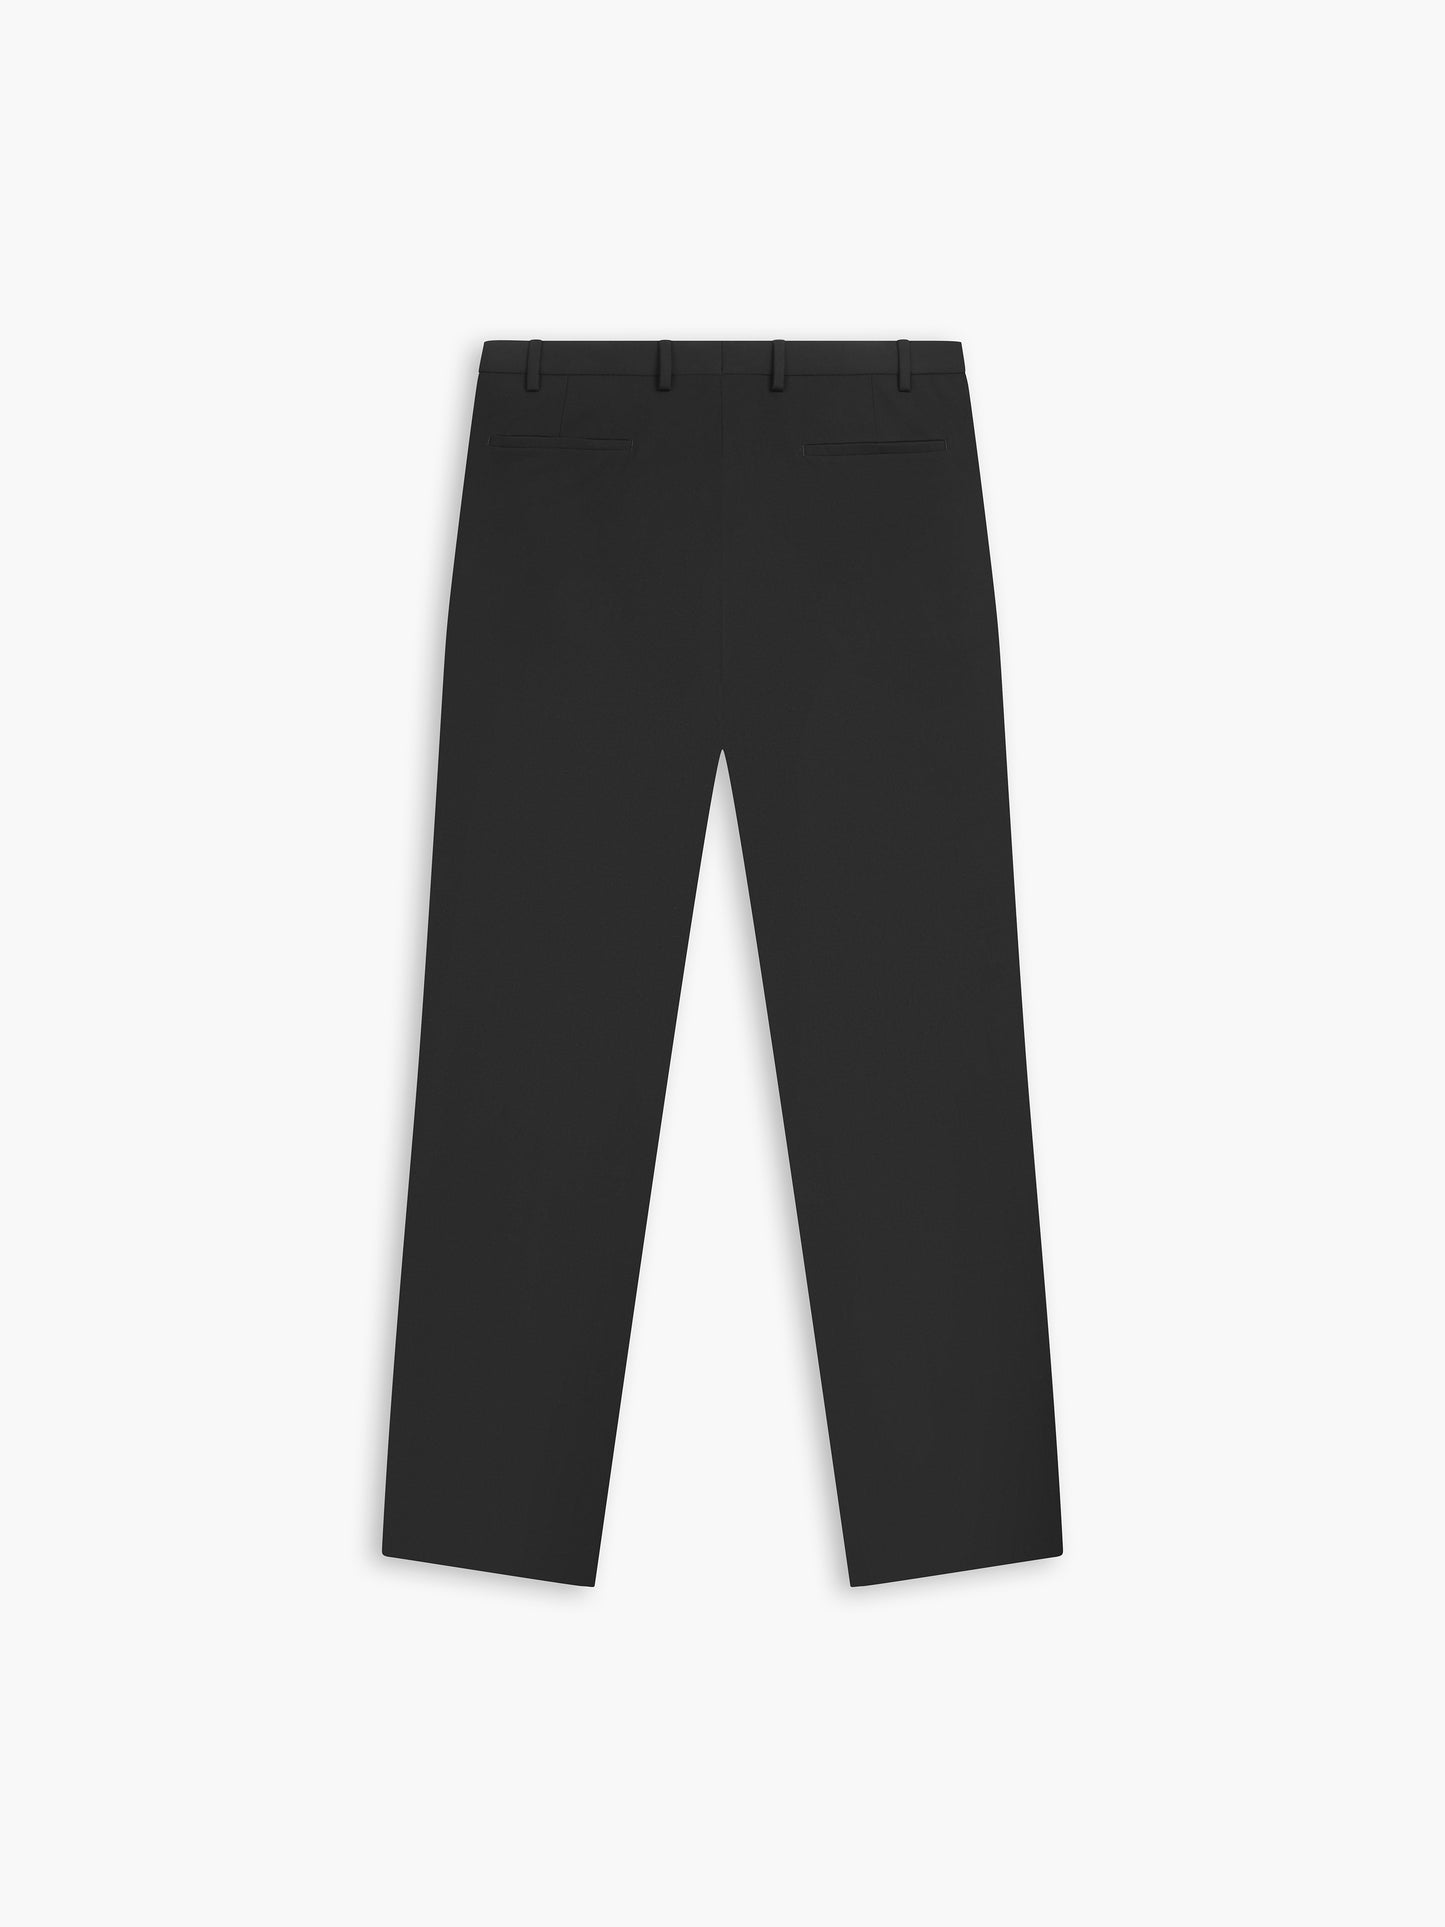 Henman Infinity Slim Fit Black Trousers